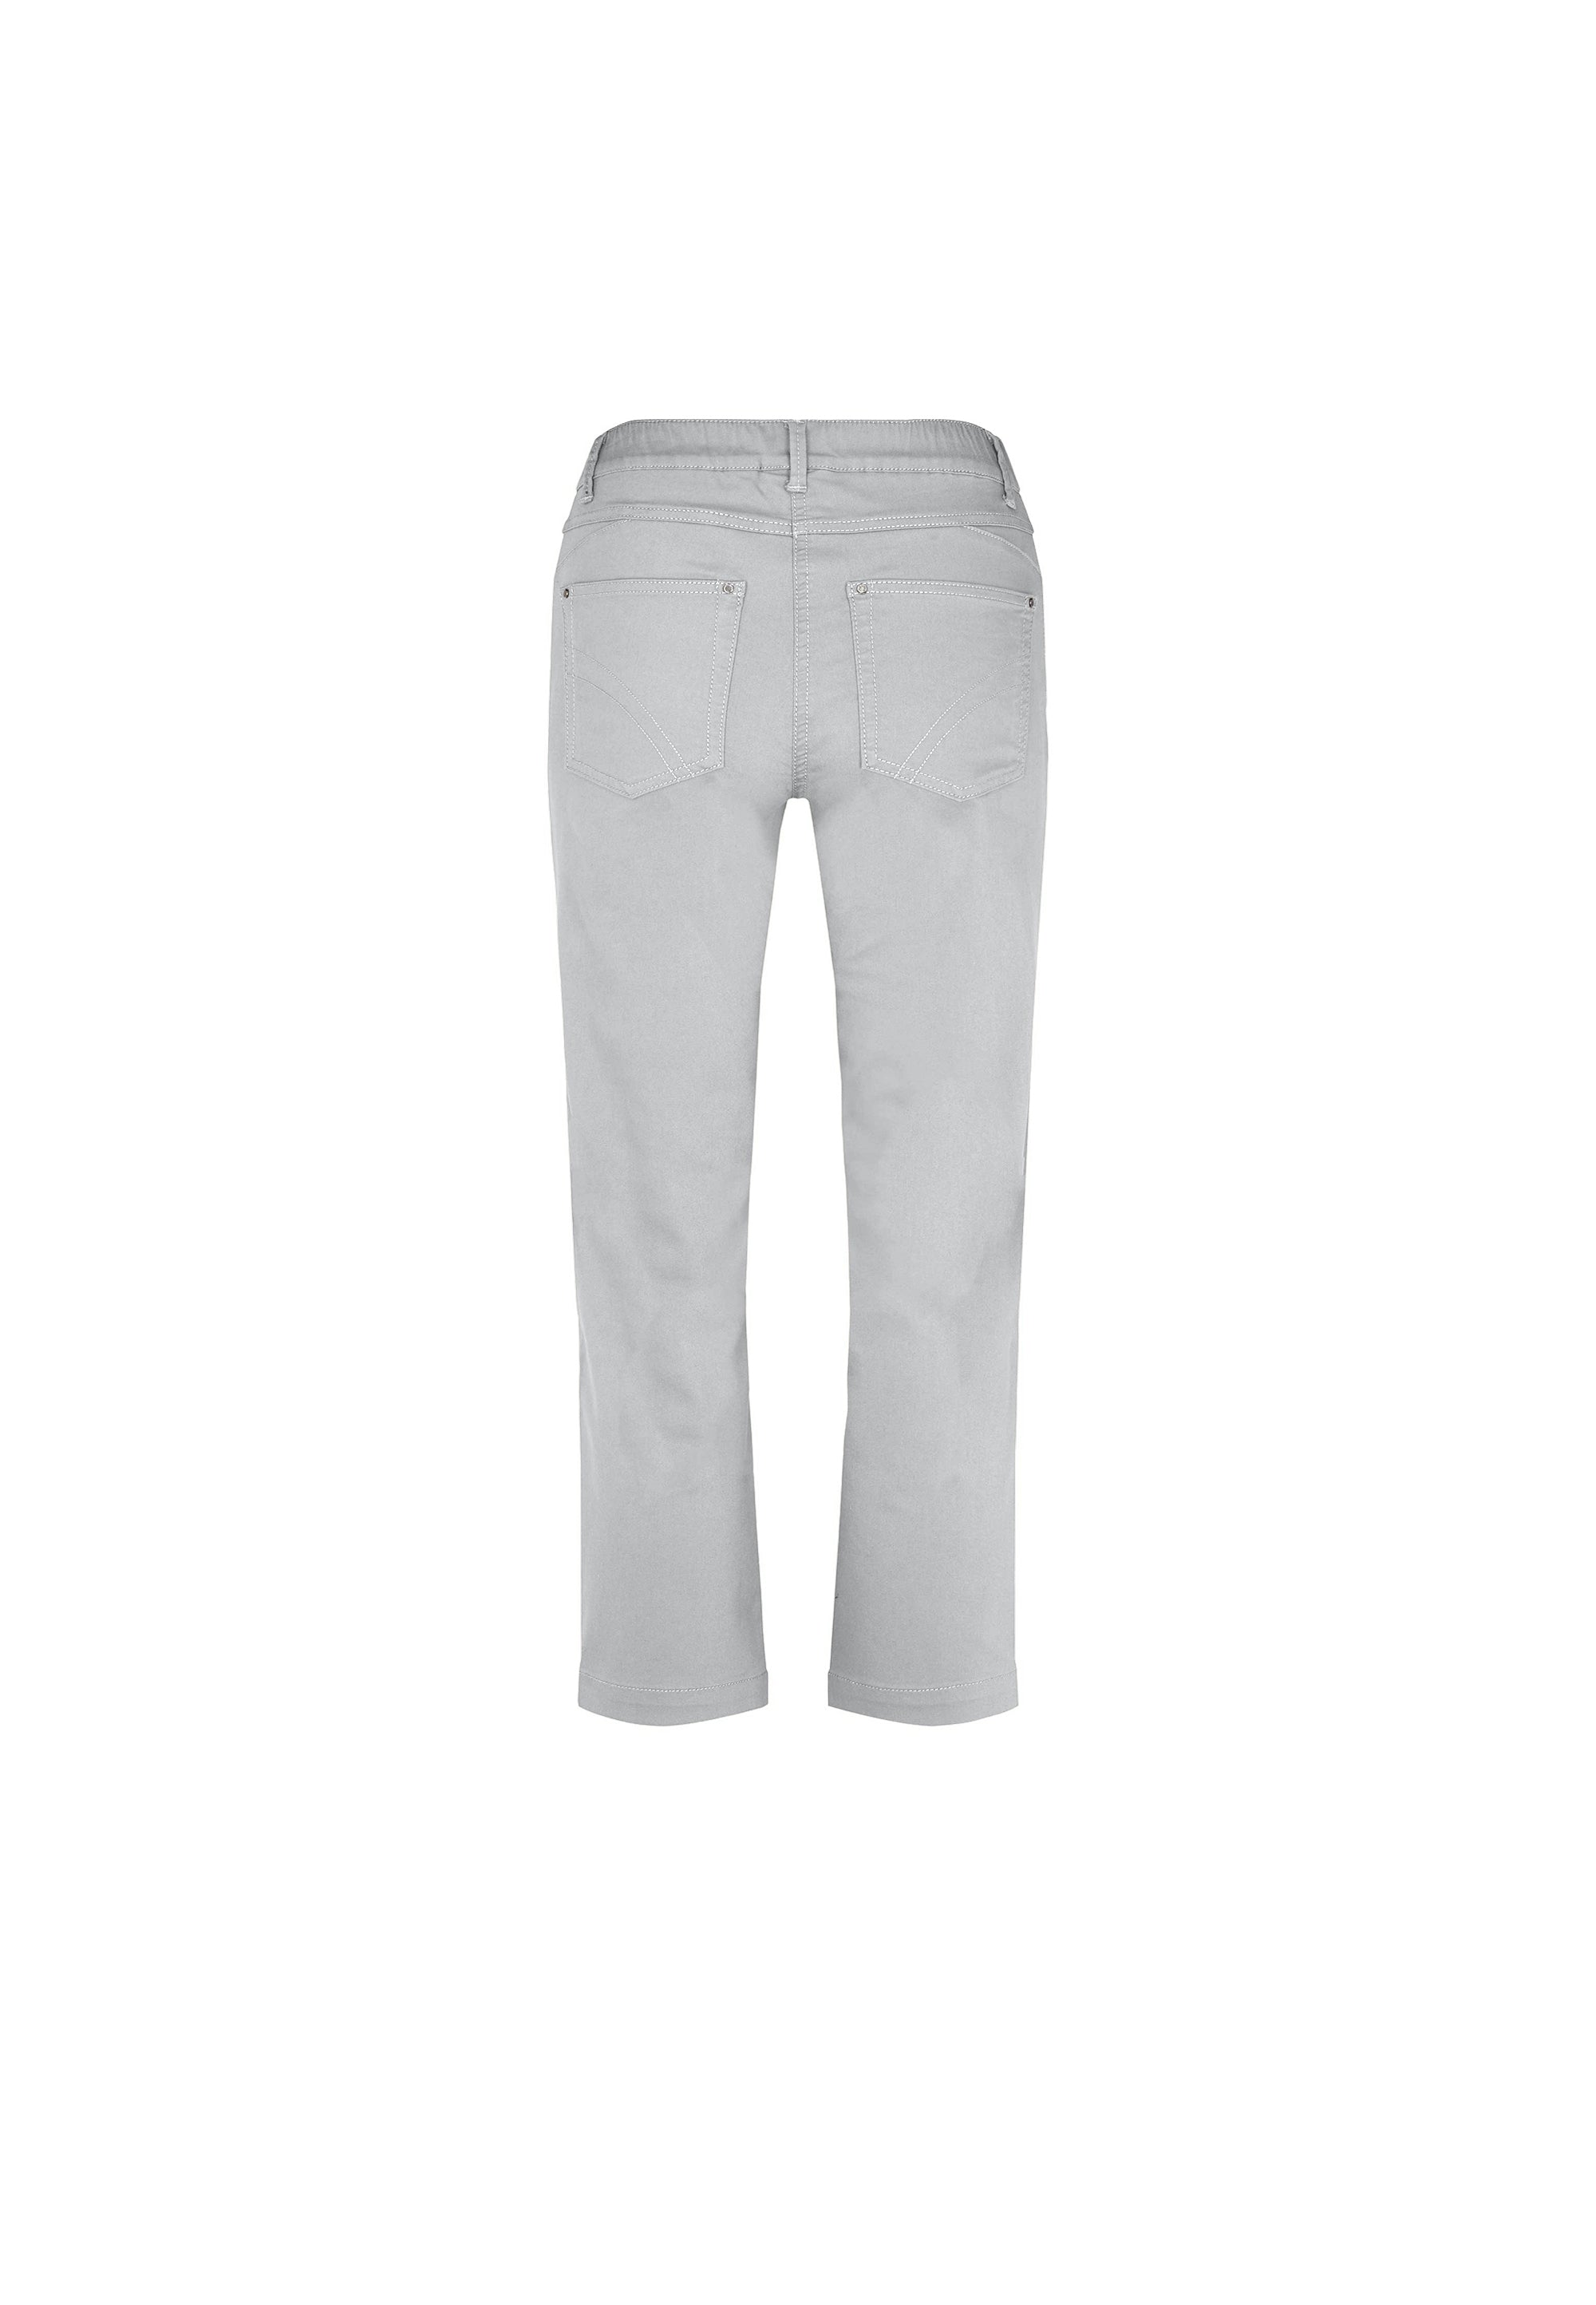 LAURIE Hannah Regular - Extra Short Length Trousers REGULAR 92000 Quiet Grey